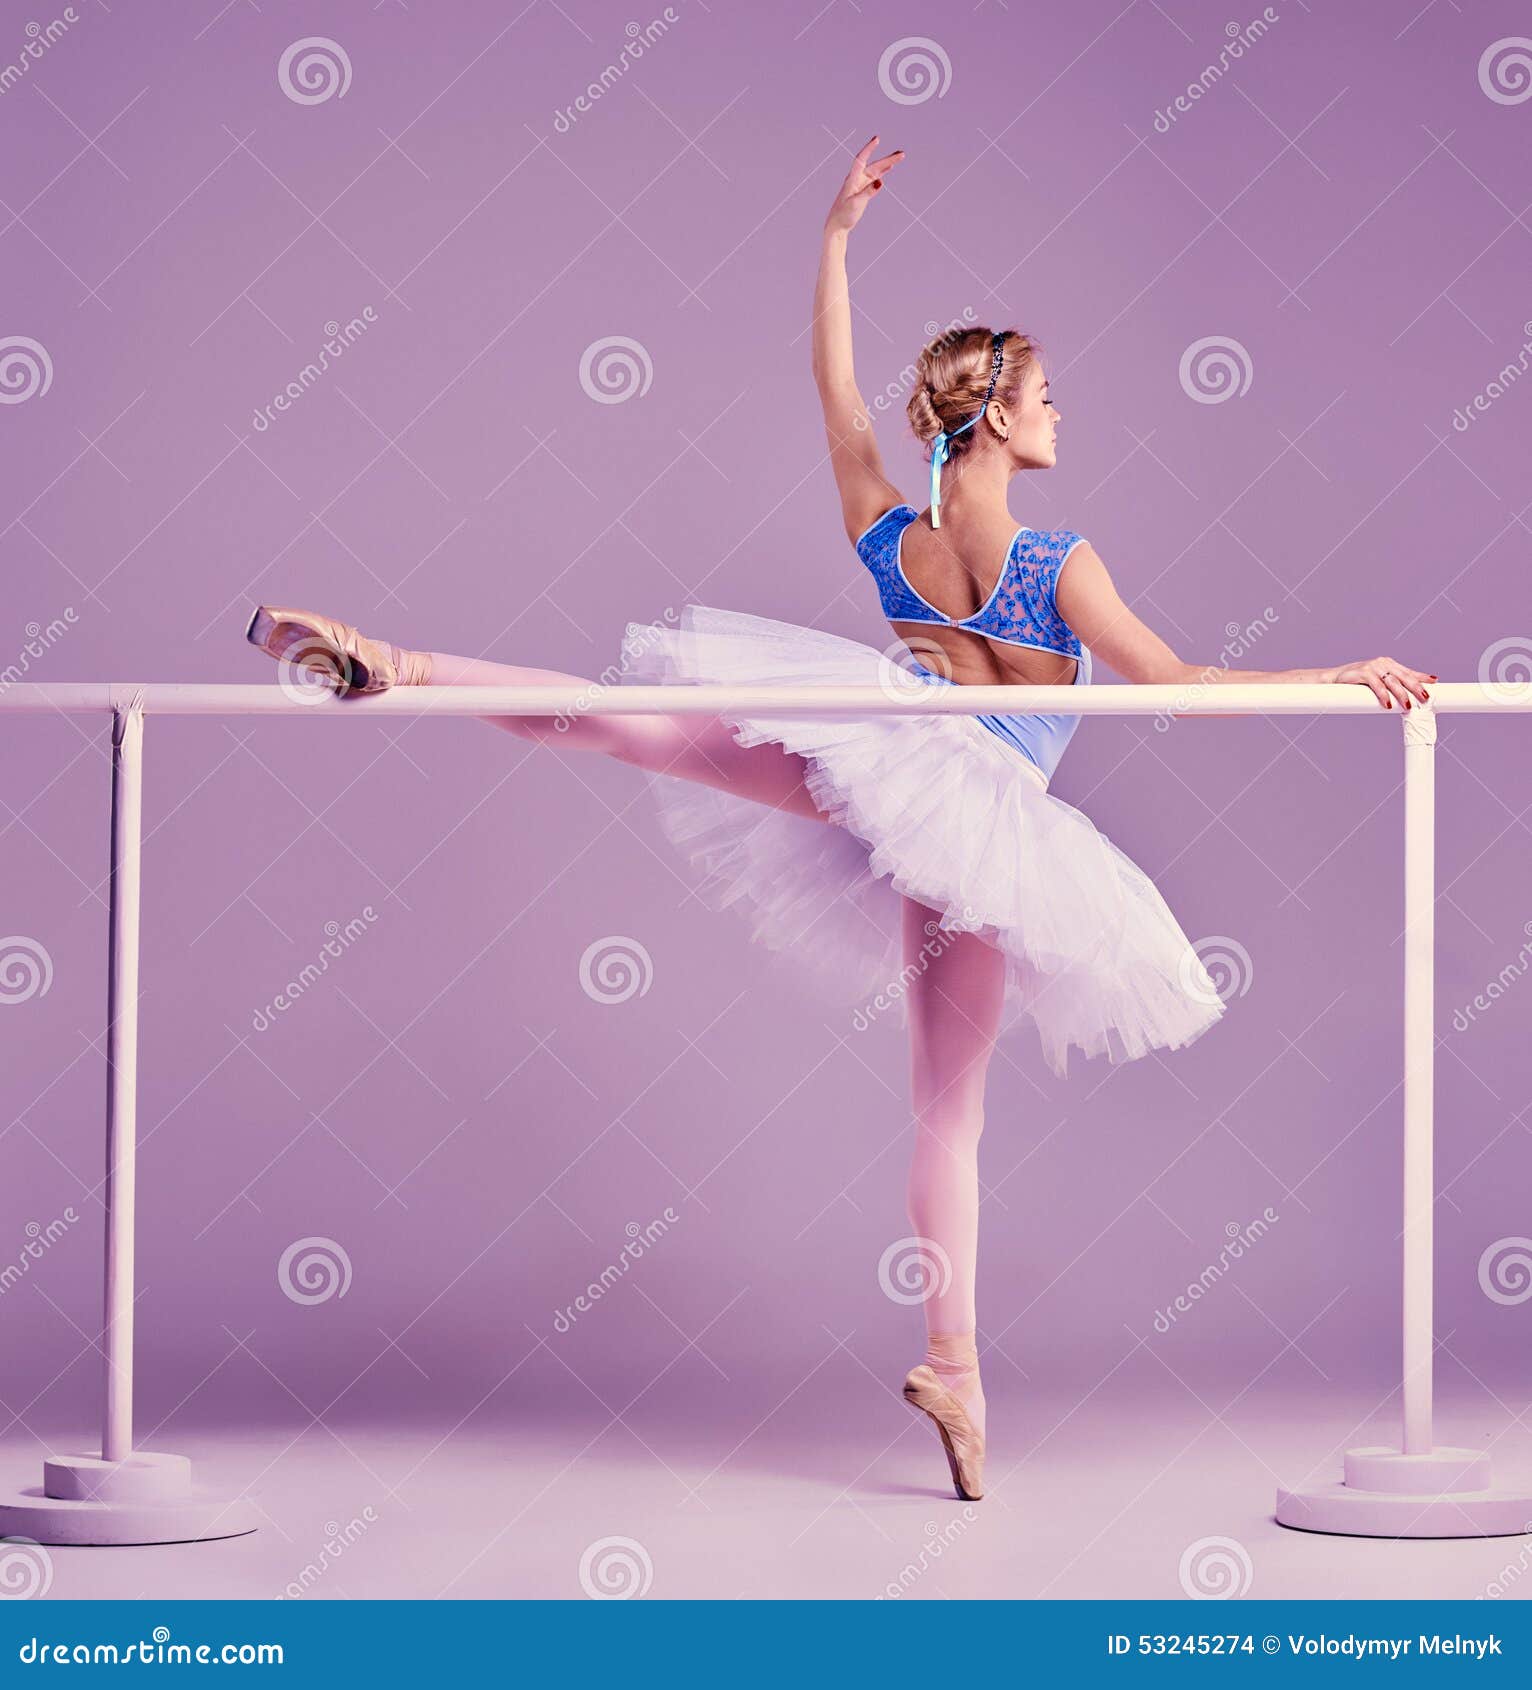 Classical Ballet Poses for Genesis 2 Female(s) | Daz 3D